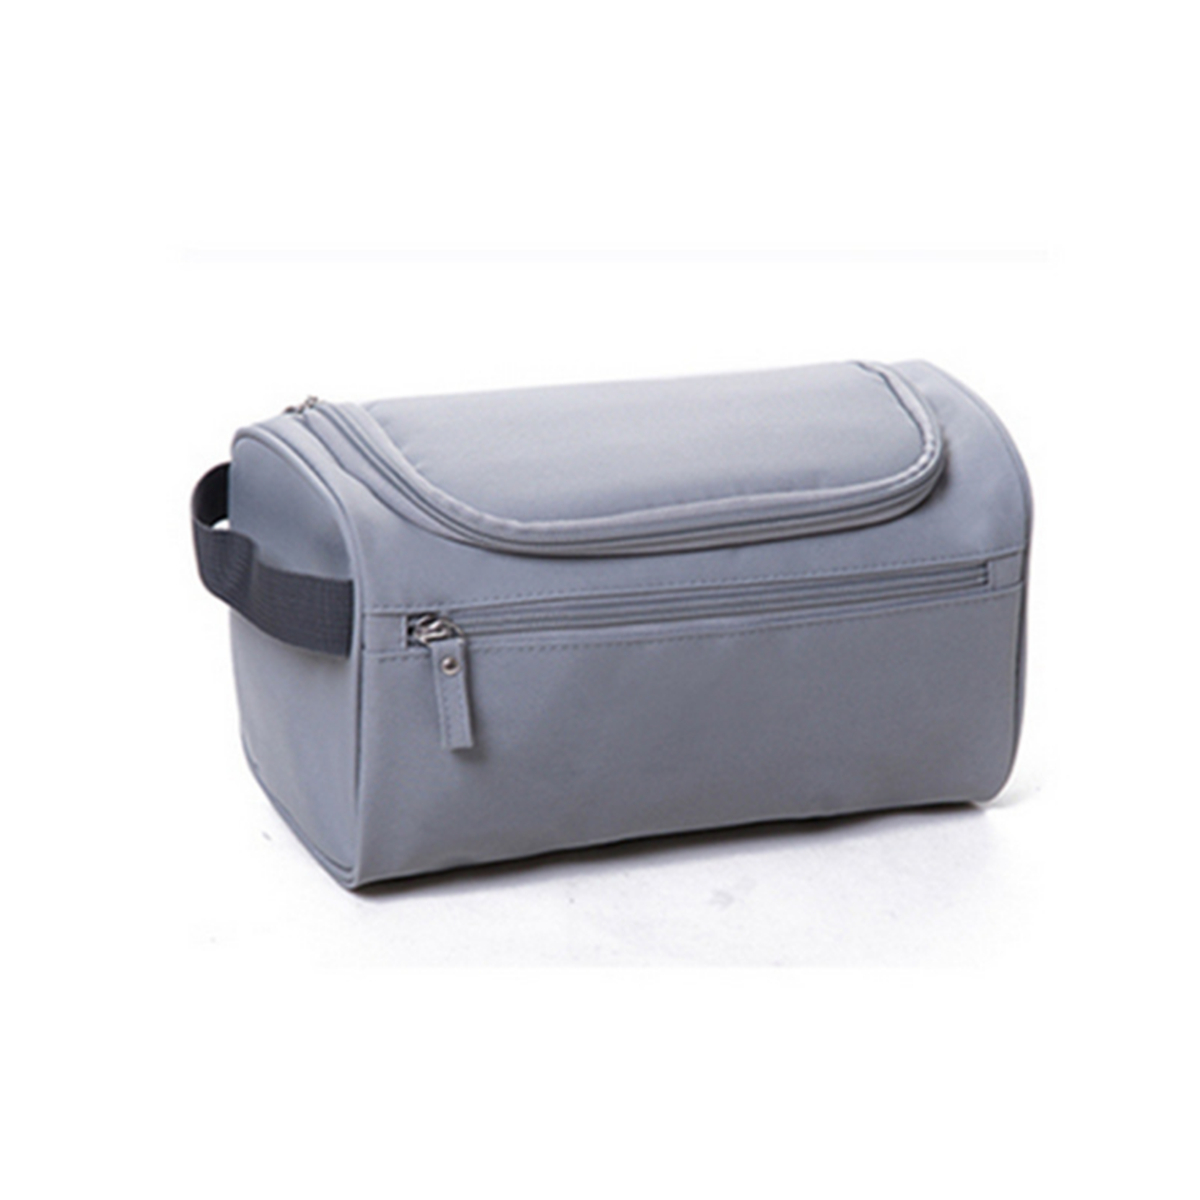 Waterproof-Hanging-Travel-Toiletry-Kit-Wash-Bag-Shaving-Case-300D-Oxford-Cloth-Cosmetic-Bag-1560821-2